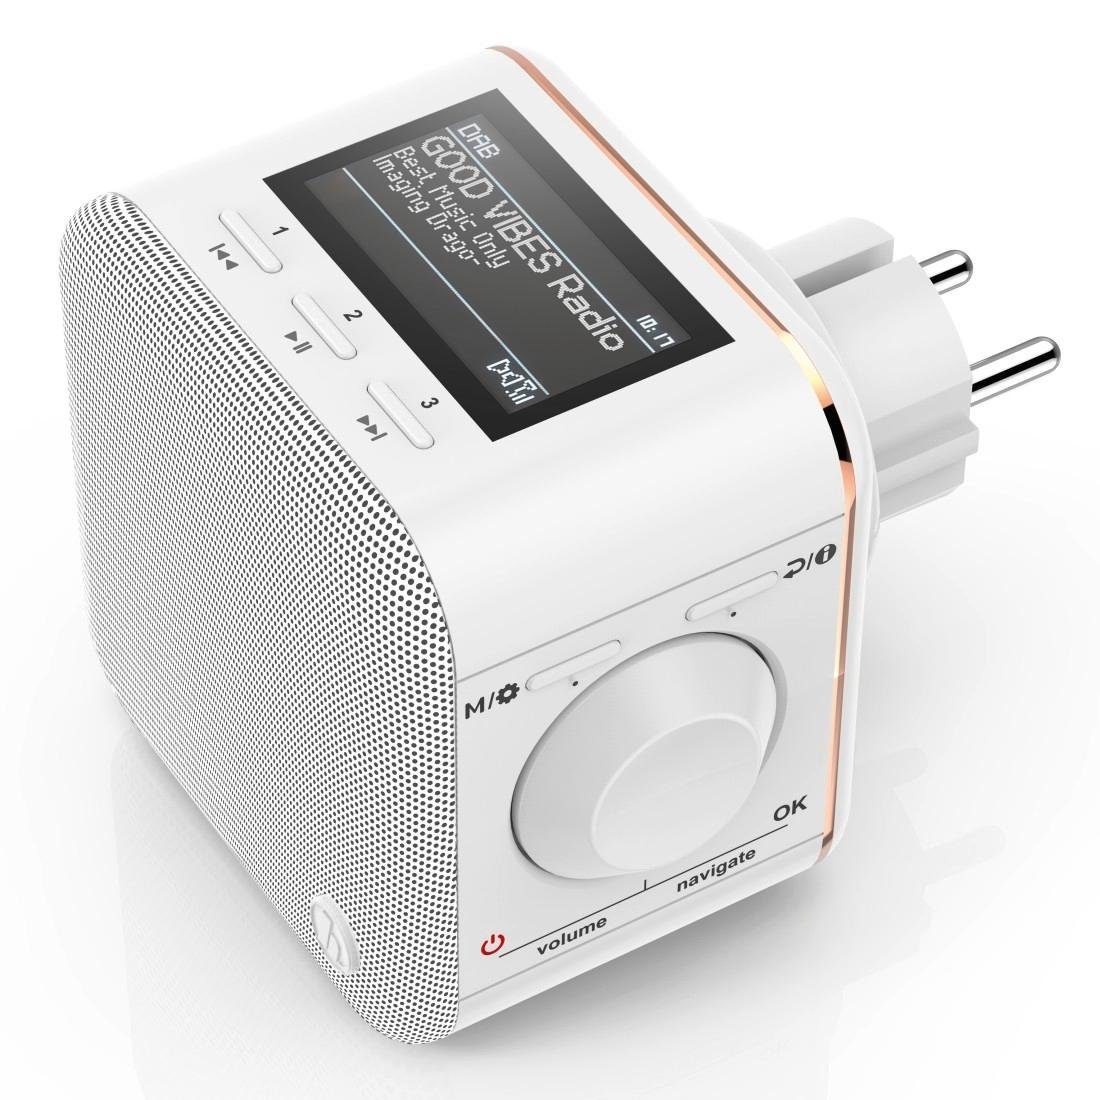 Steckdose, DR40BT-PlugIn (DAB) Bluetooth/FM Radio DAB f. Hama Steckdosenradio, Digitalradio